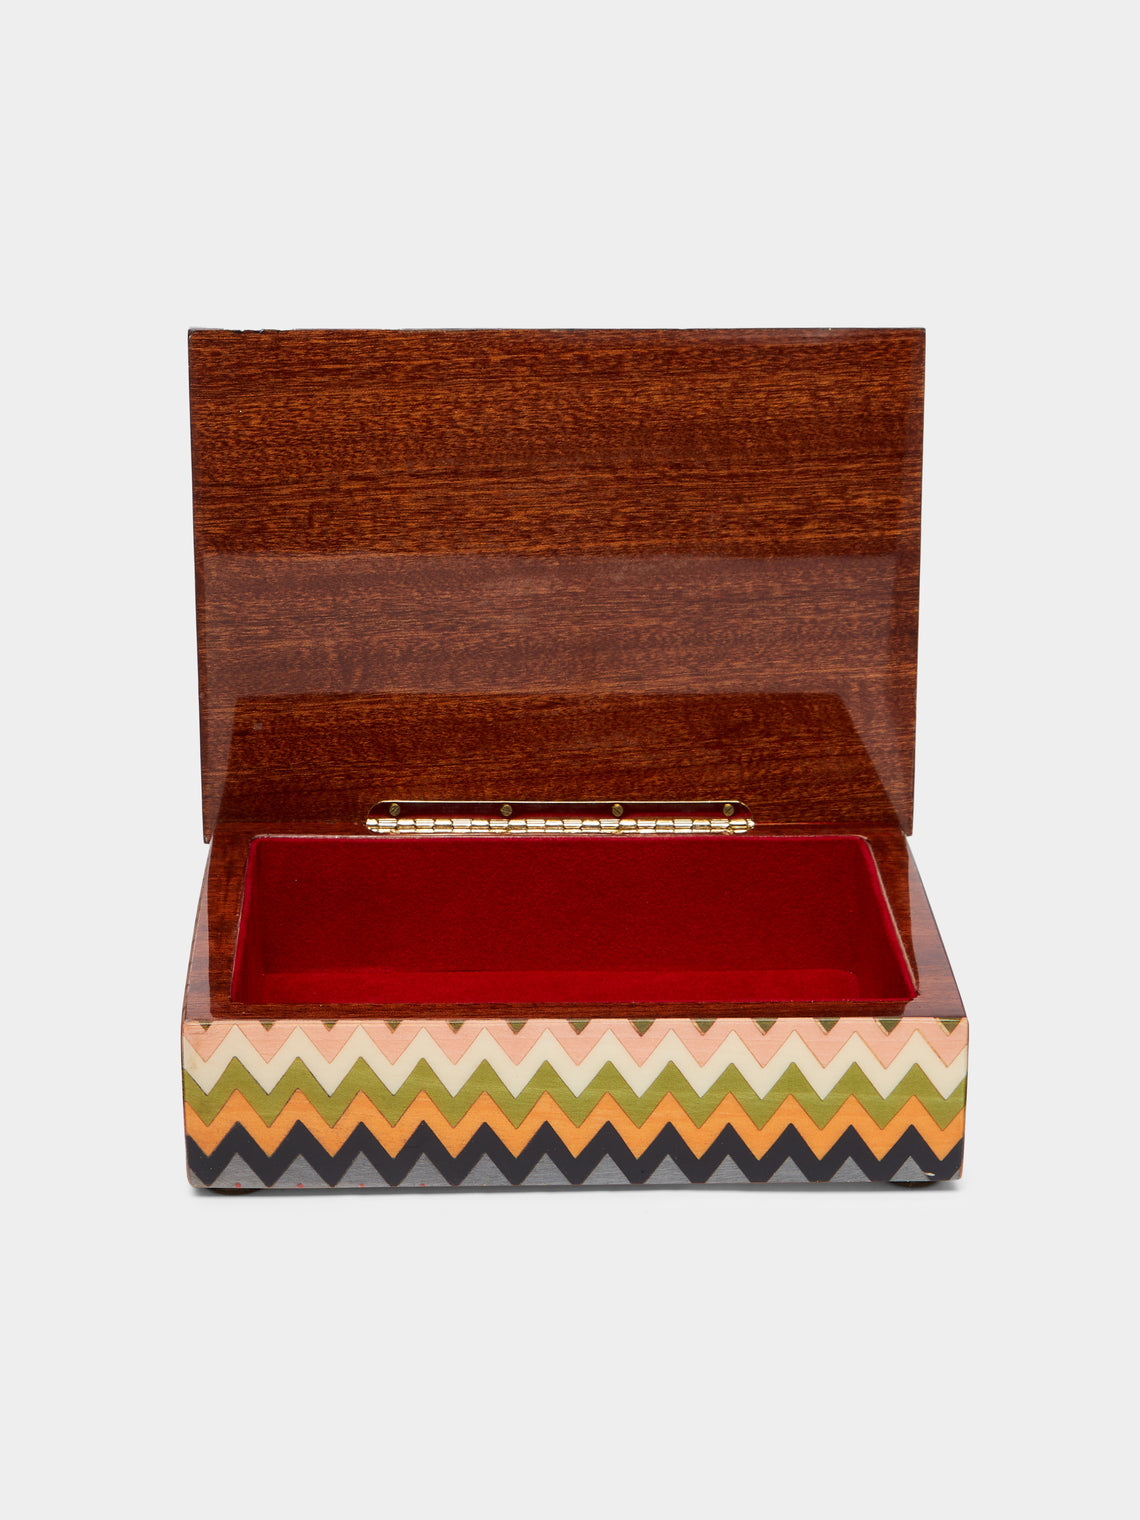 Biagio Barile - Chevron Wood Inlay Box -  - ABASK